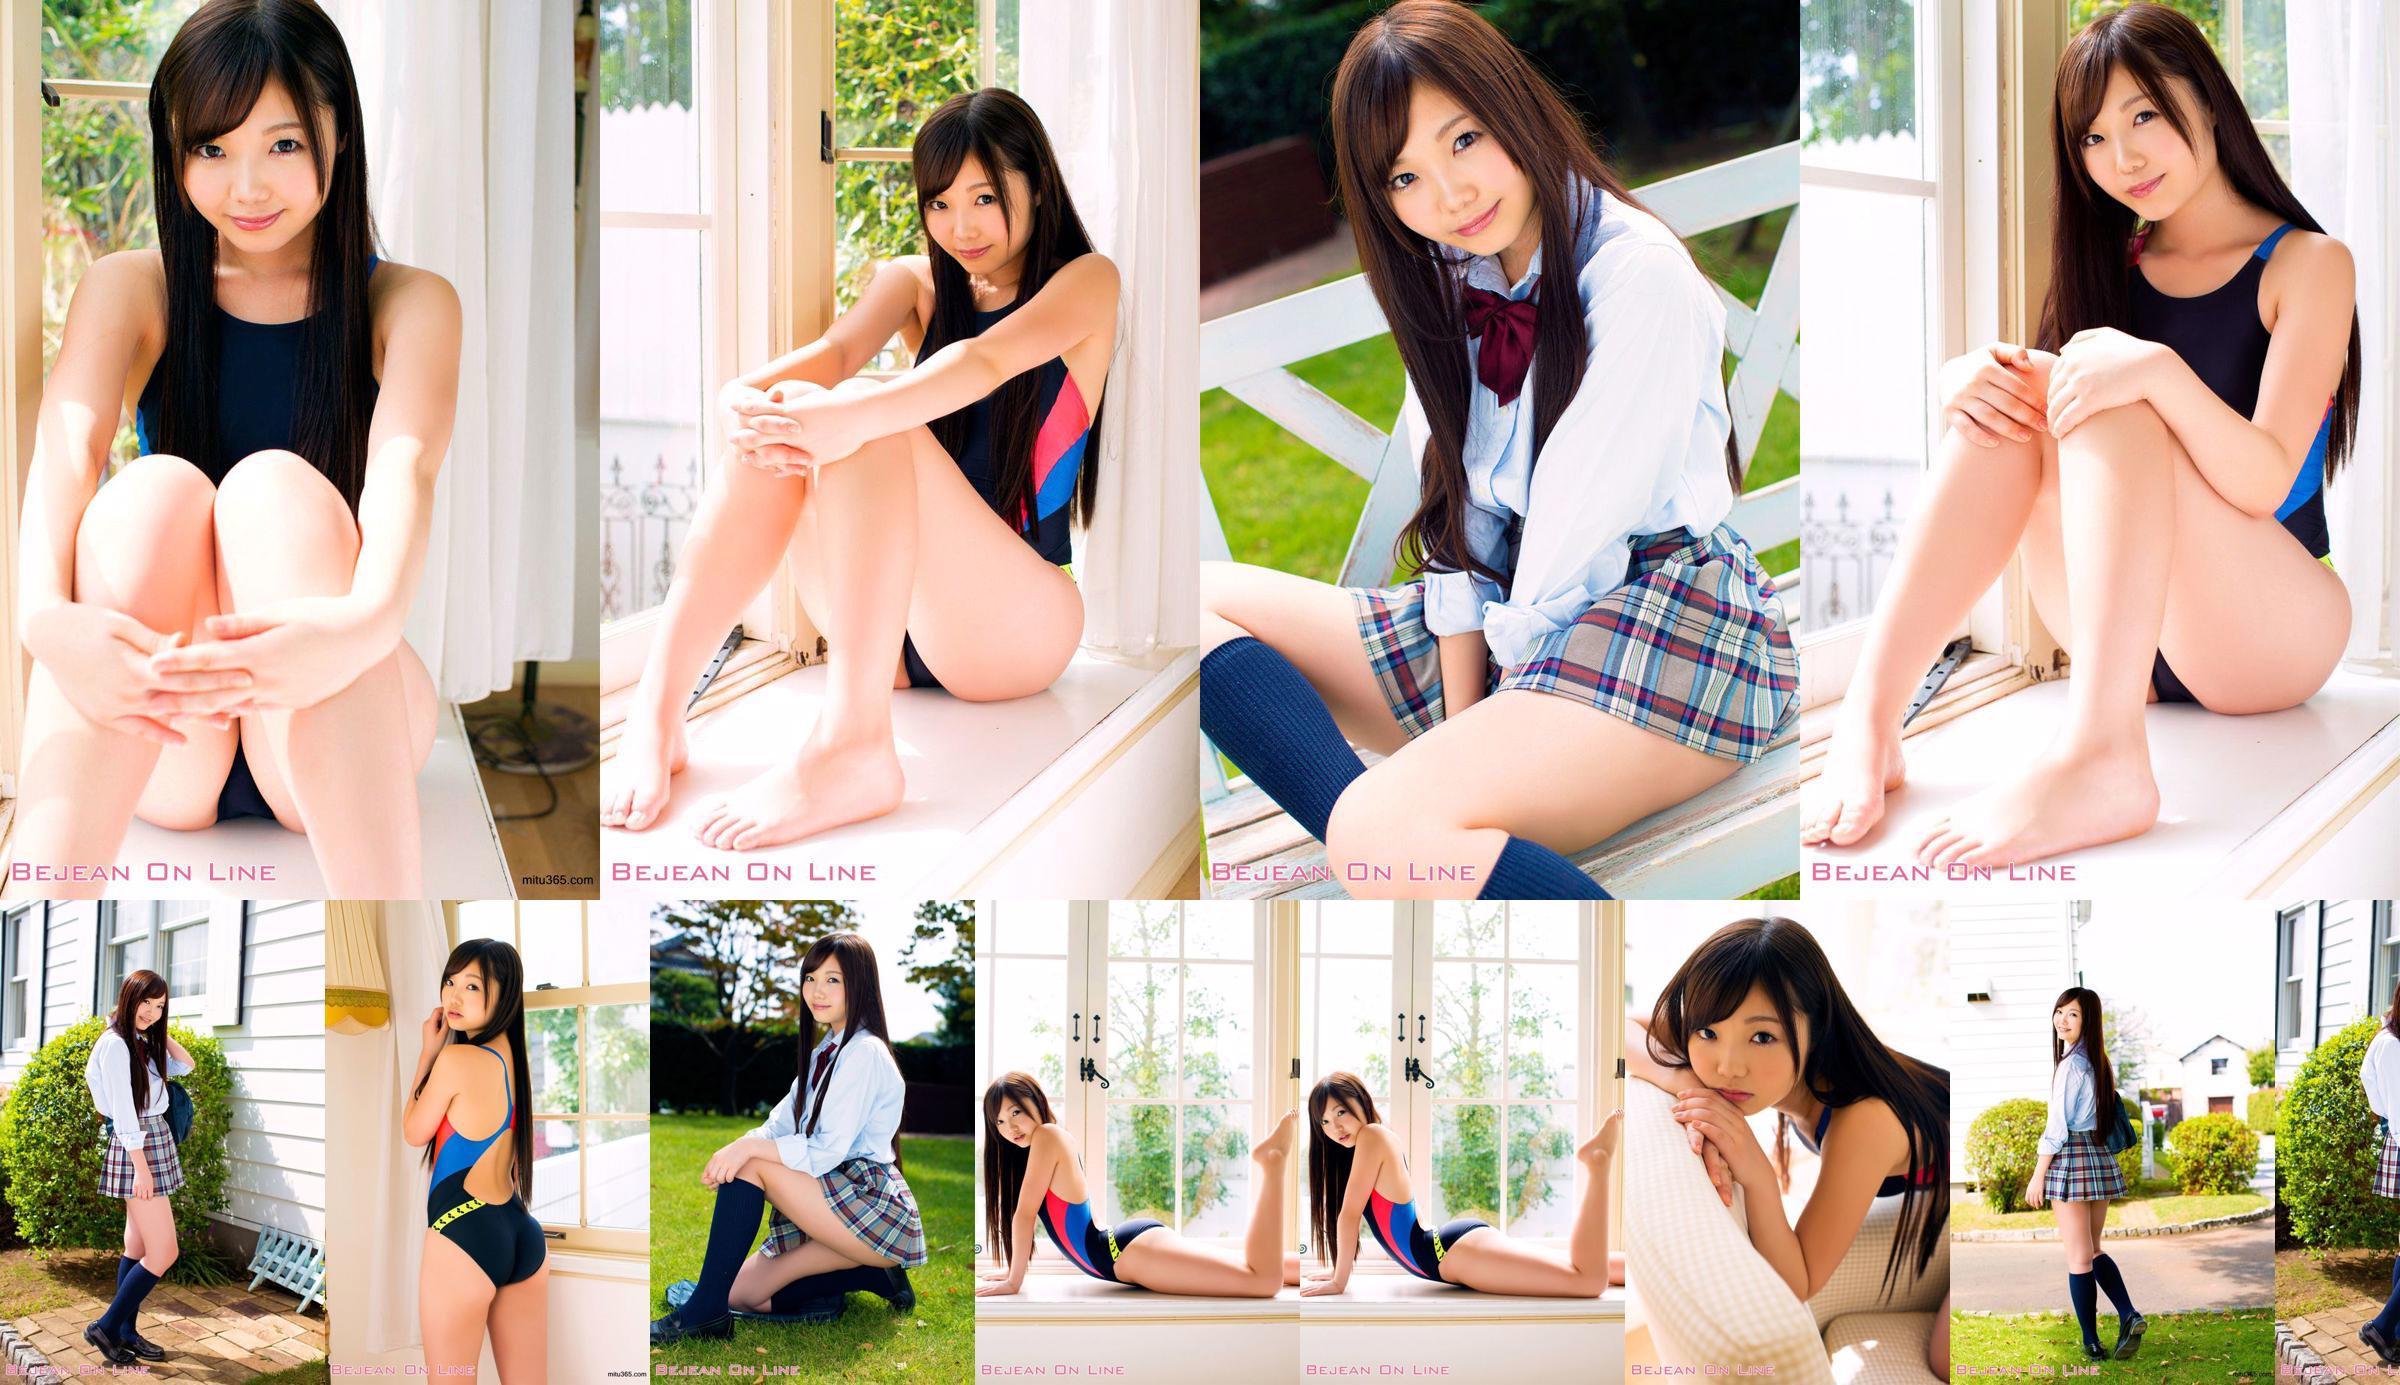 Rie Matsuoka Matsuoka Riei [Bejean Online] Private Bejean Girls 'School No.5a29c0 Seite 1